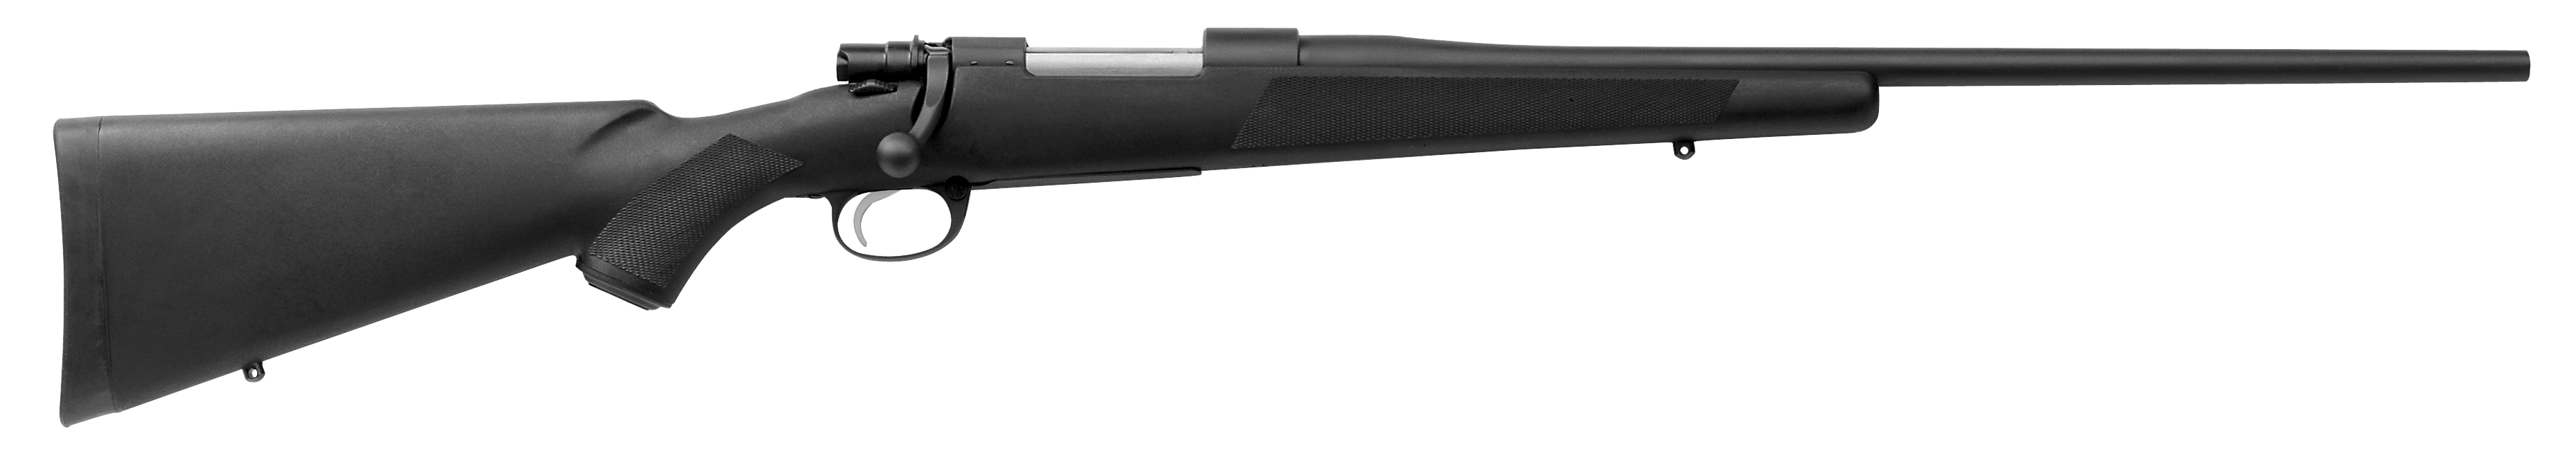 Field Grade Mauser 98